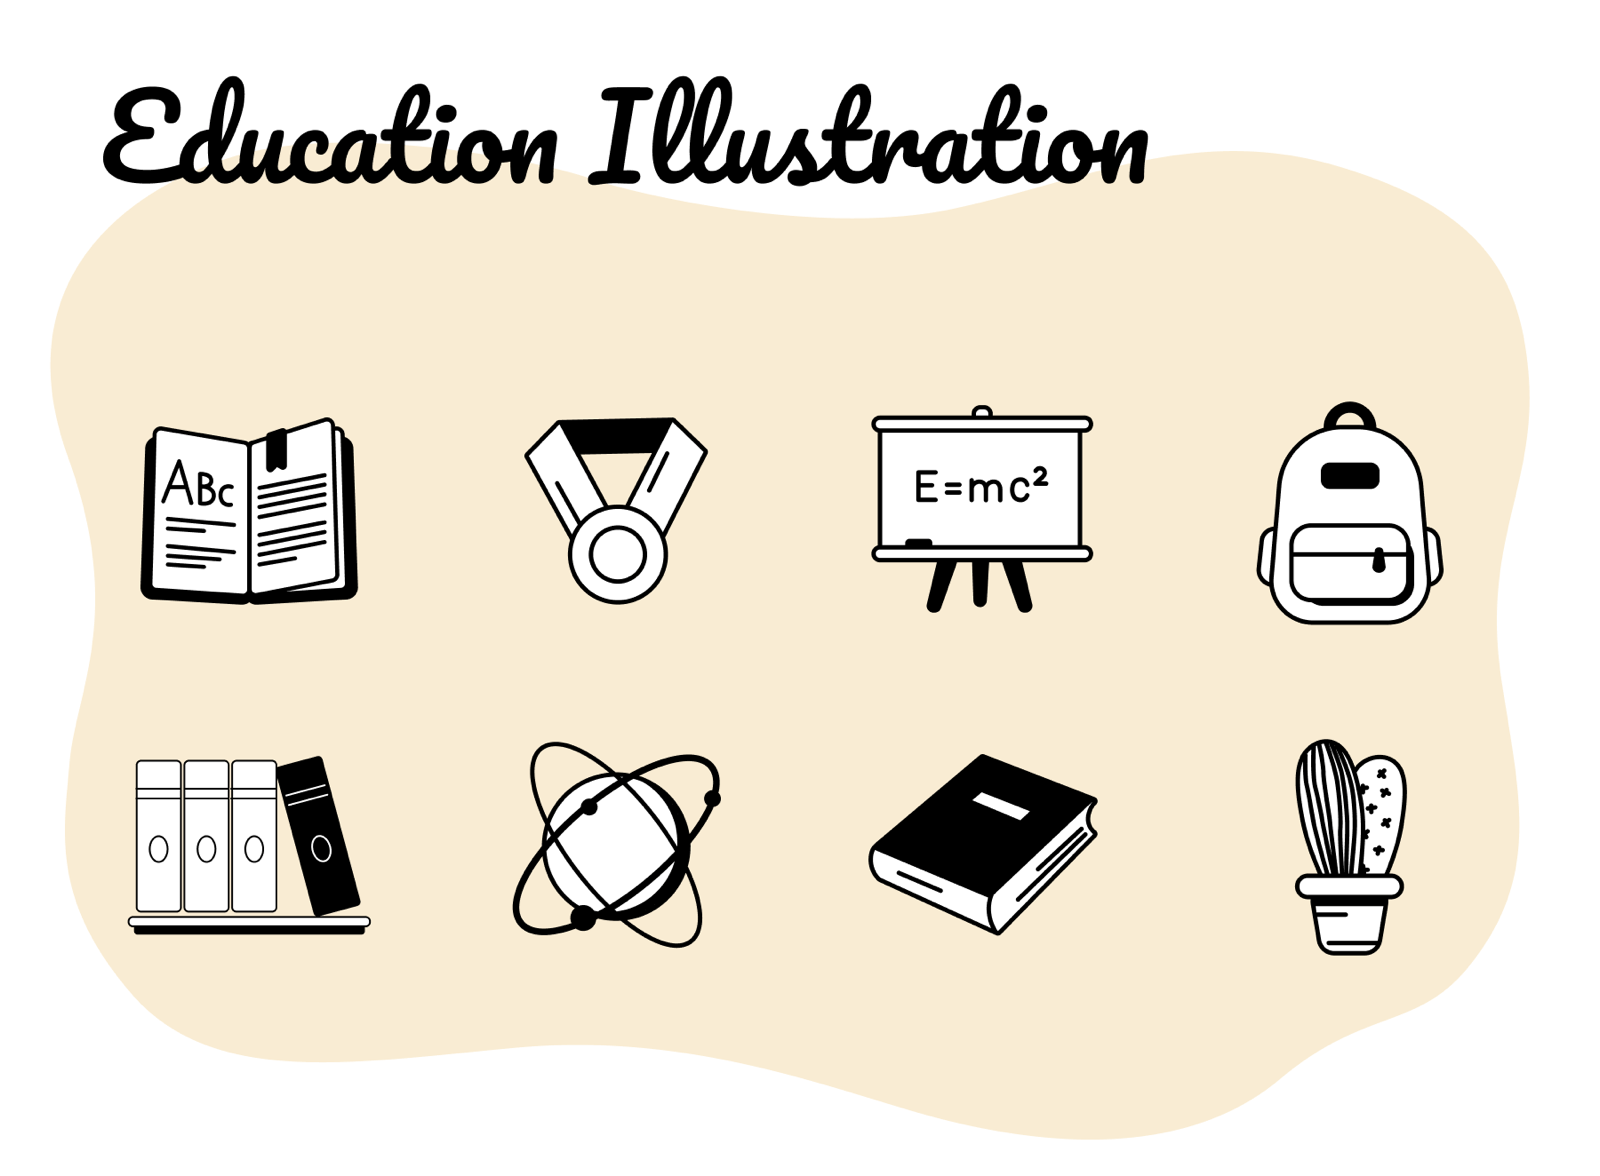 Education Illustration